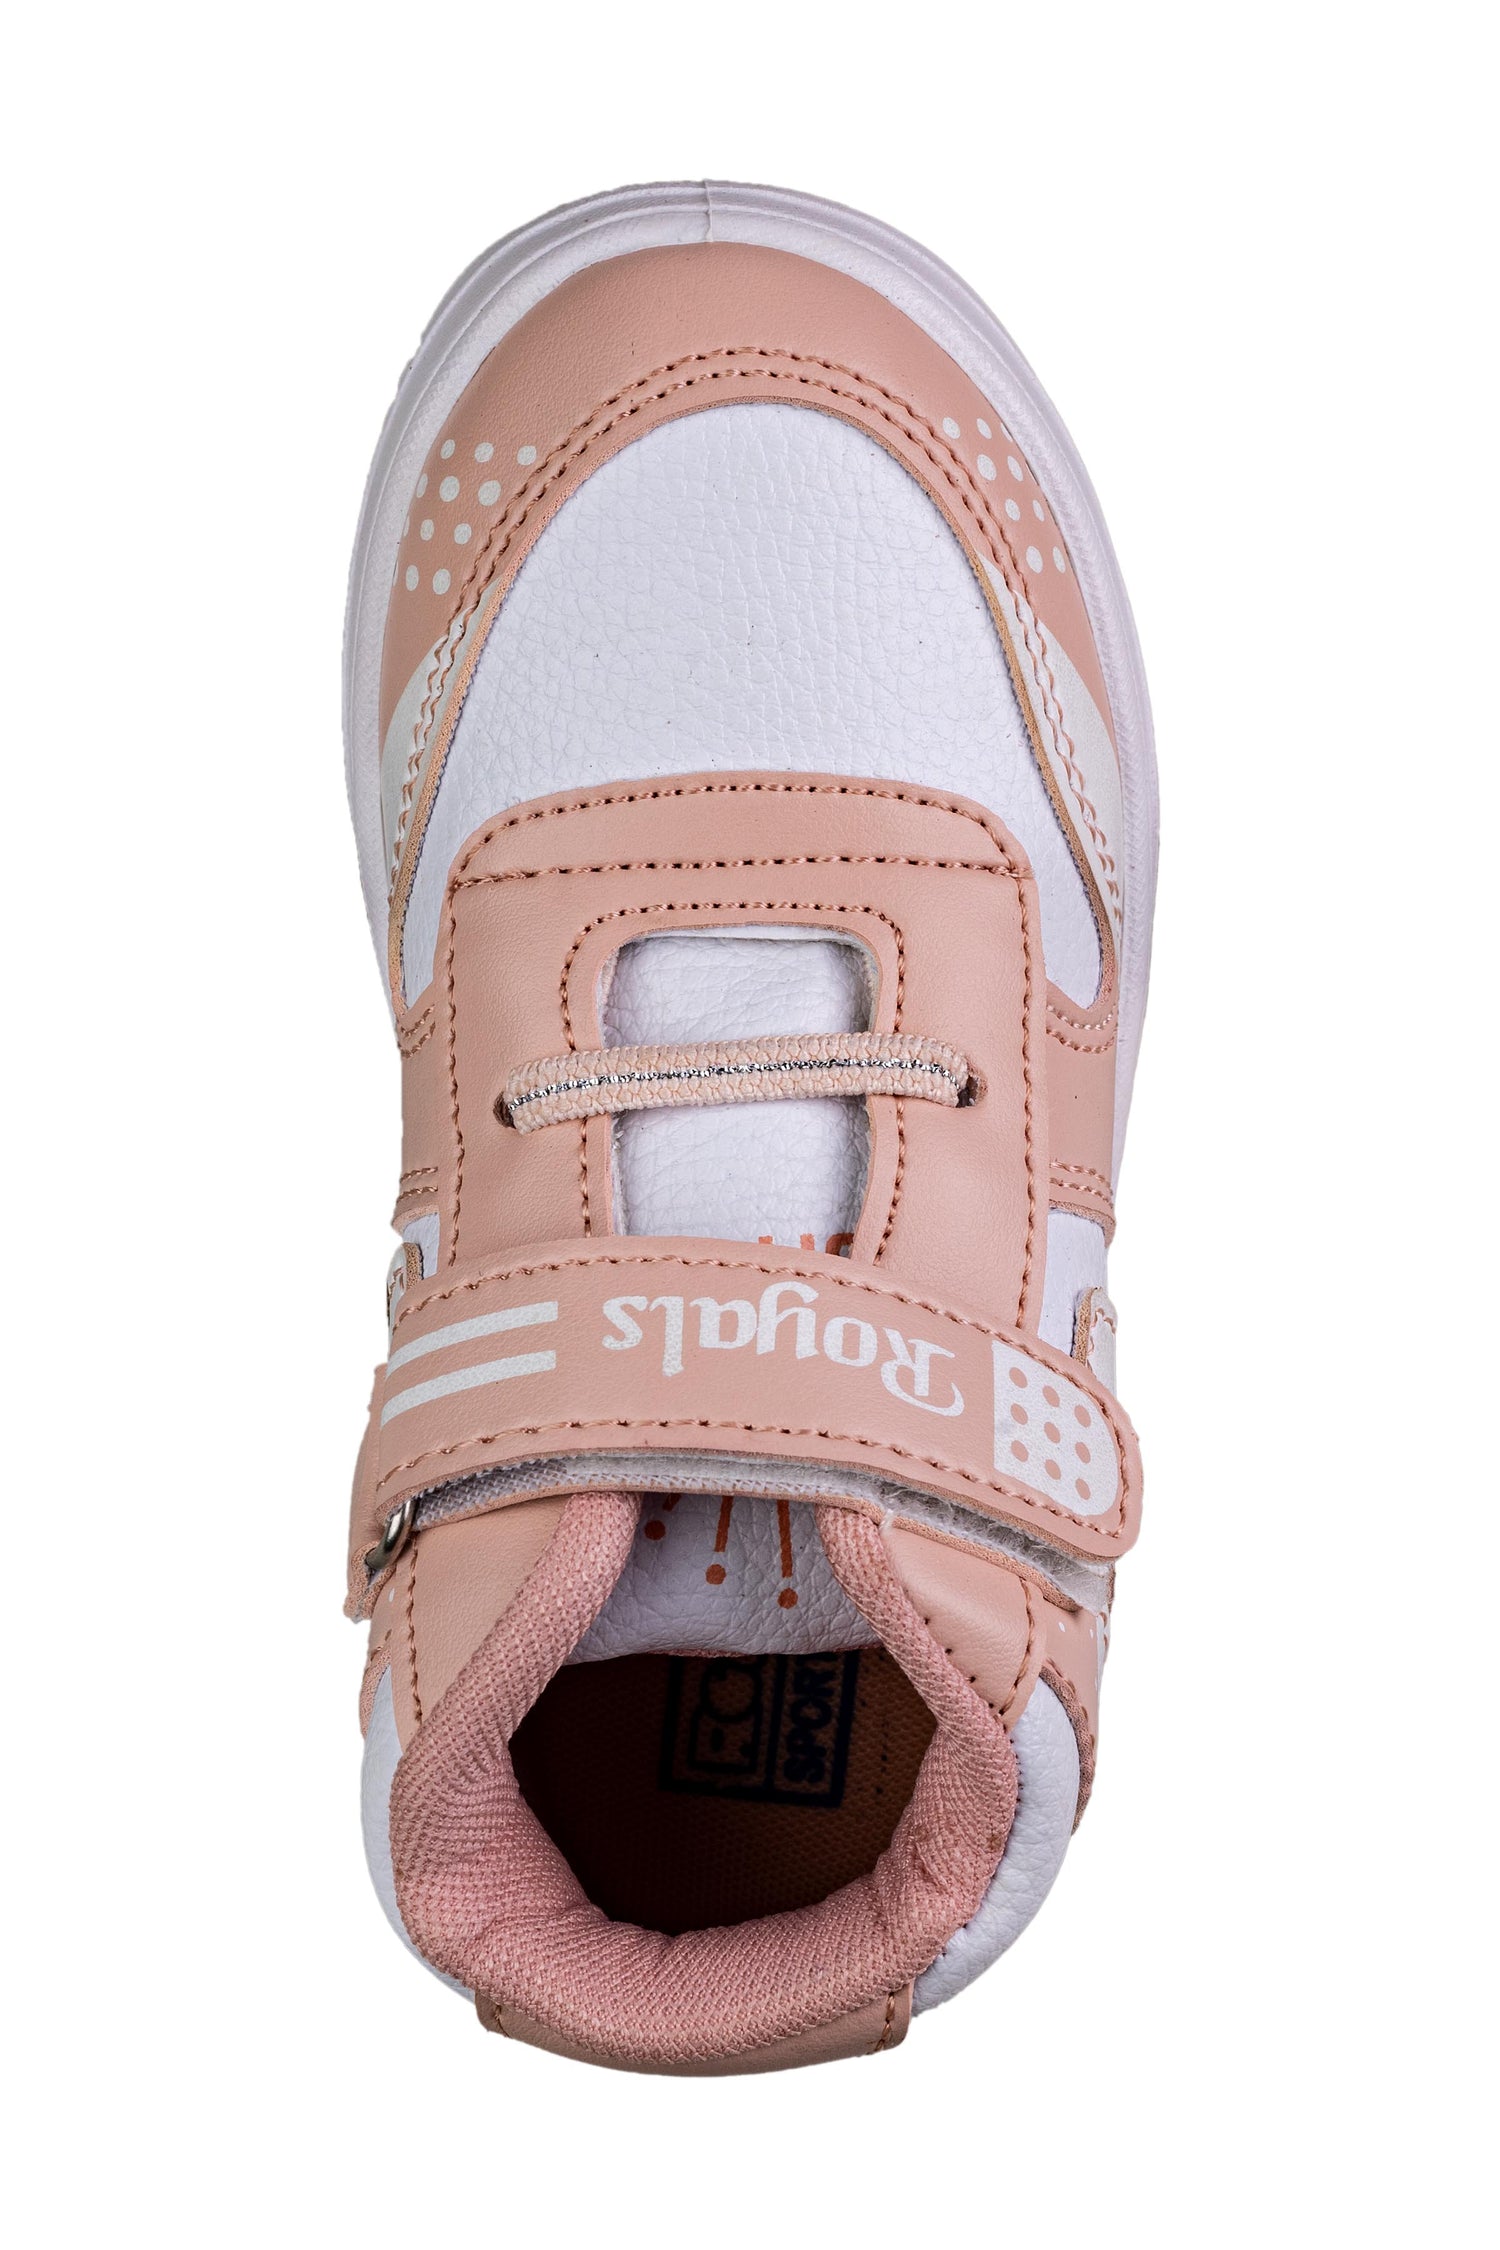 Rouba Peach/White Children Sports Shoe